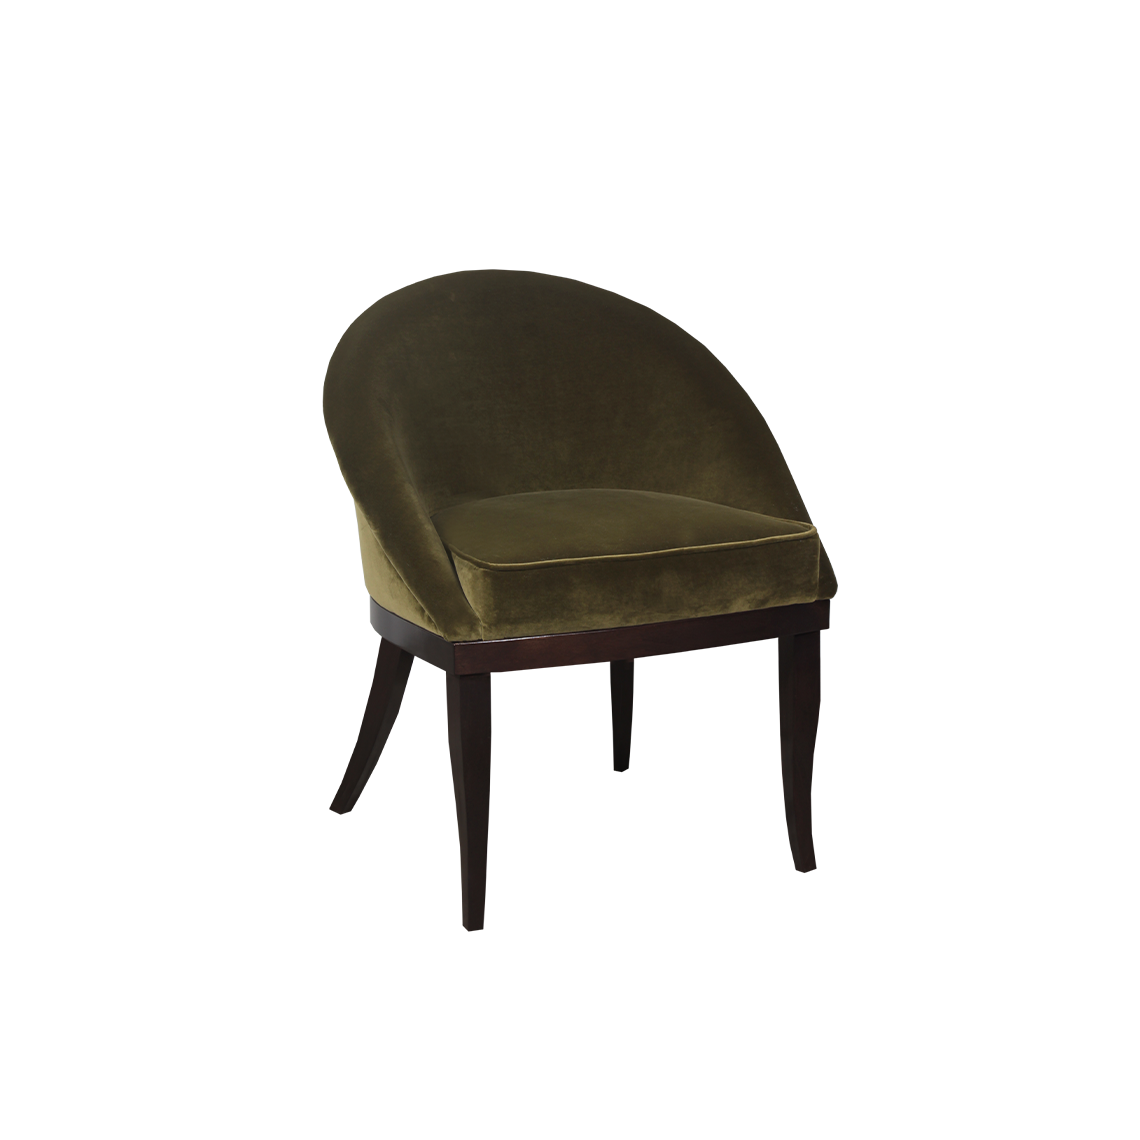 Kim Dining Chair